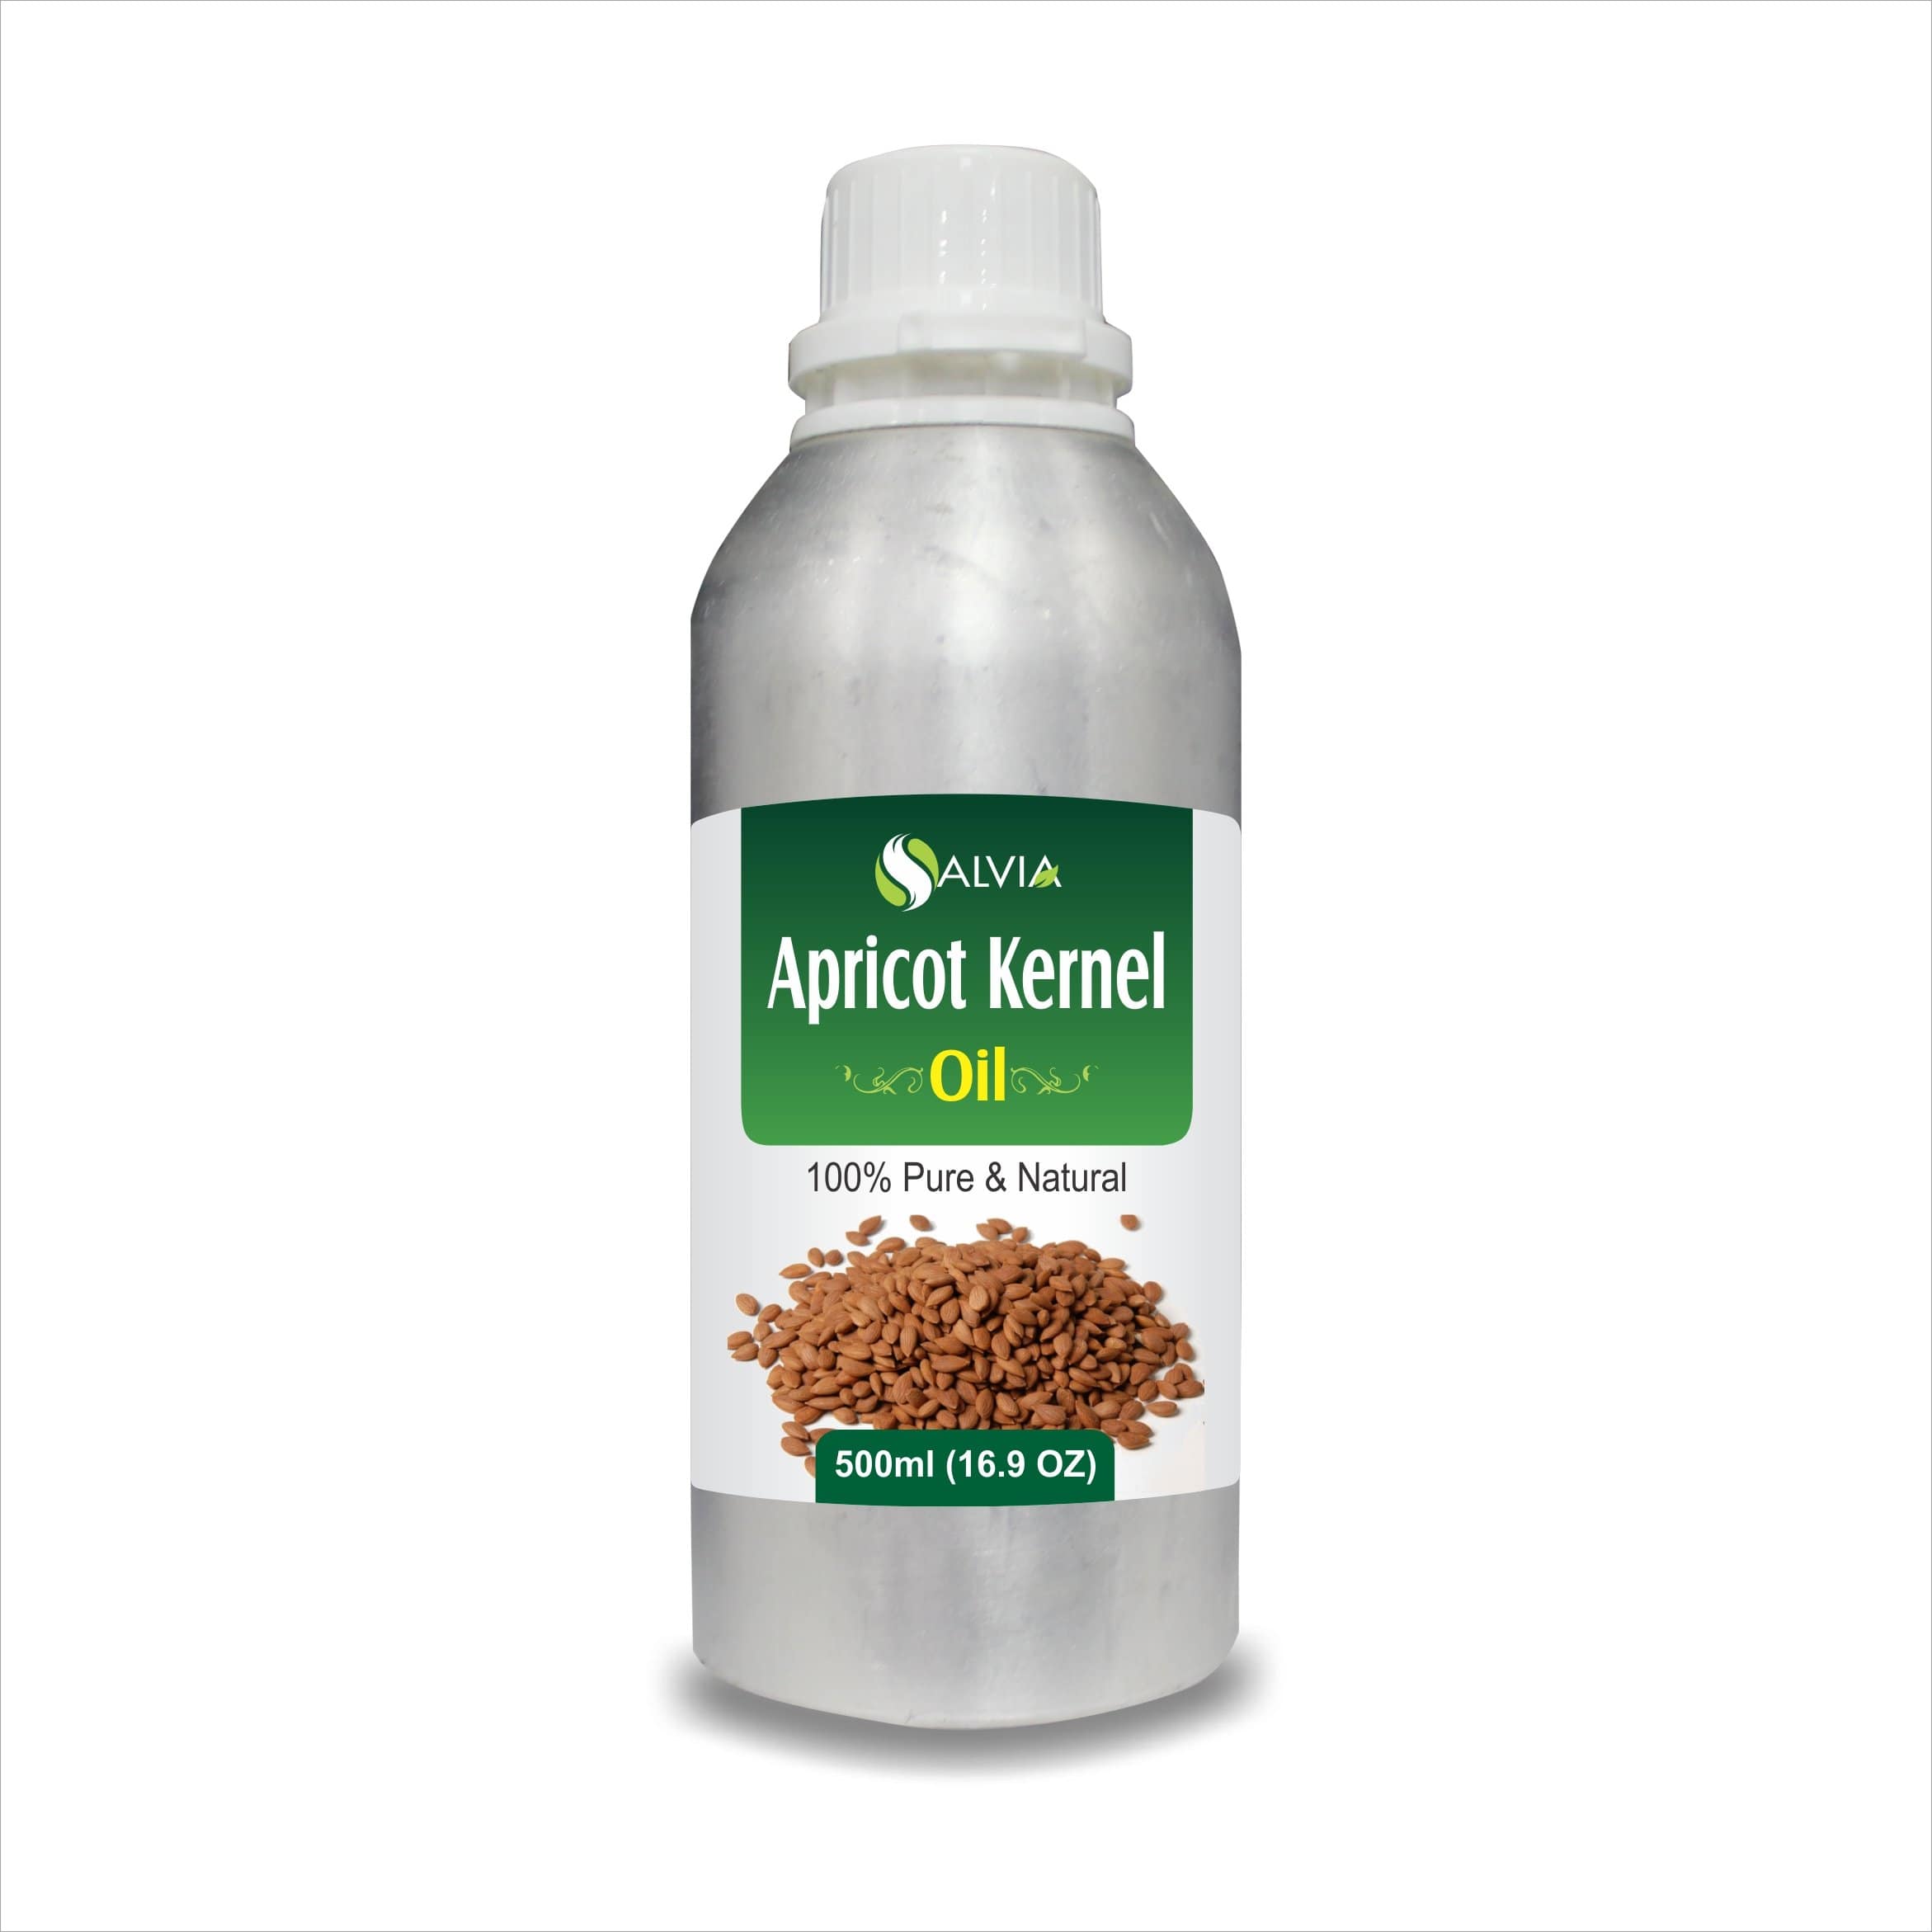 apricot kernel oil benefits